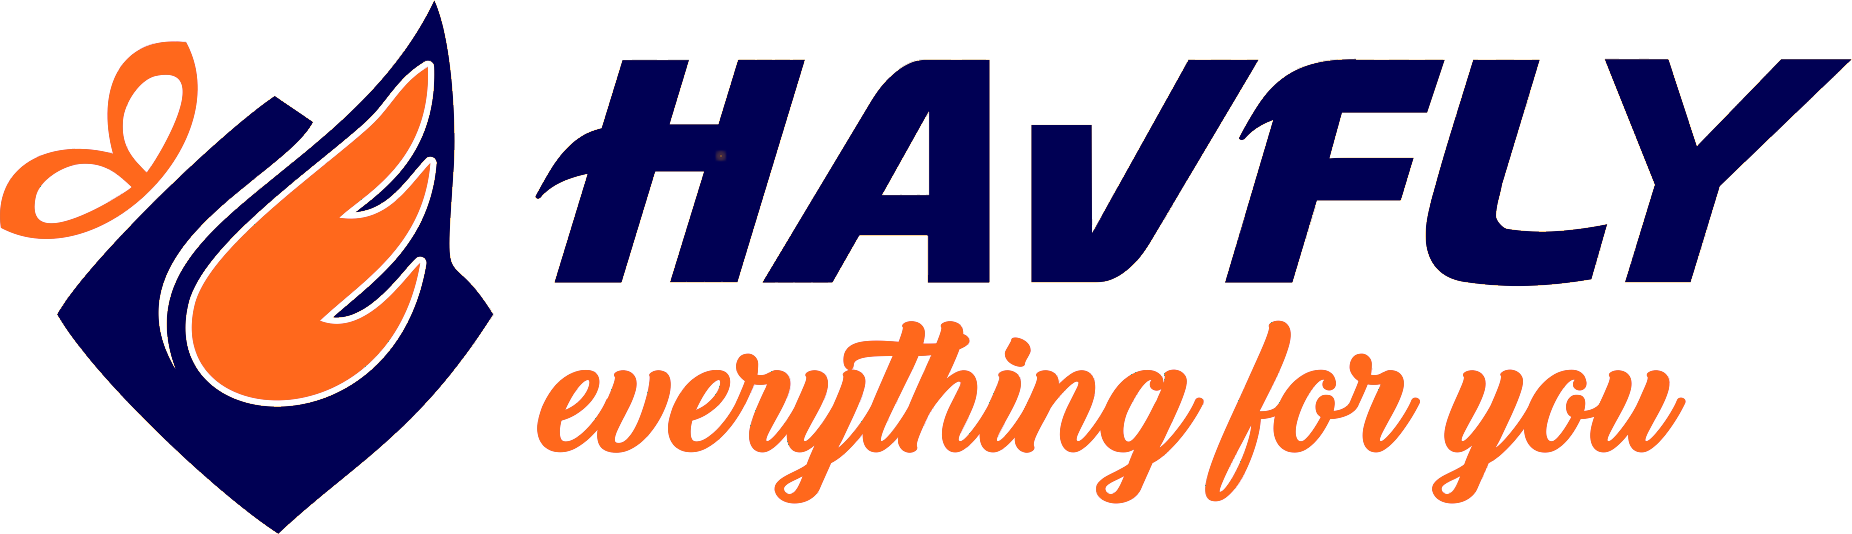 Havfly - Mobile App & Gaming Development Company logo